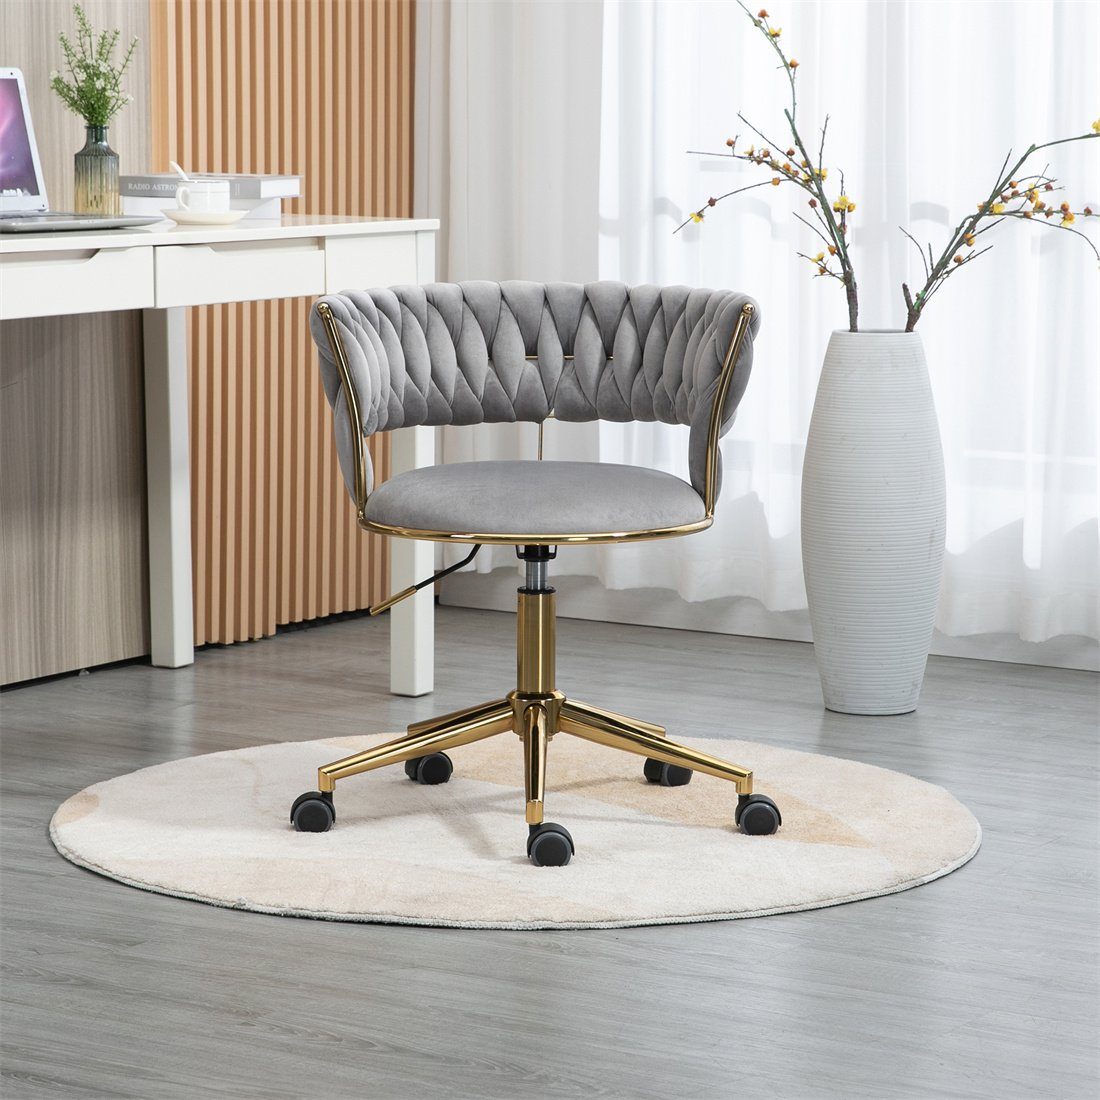 DÖRÖY Drehstuhl Home Office Chair,Kosmetikstuhl,Verstellbarer Computerstuhl,Grau | Drehstühle